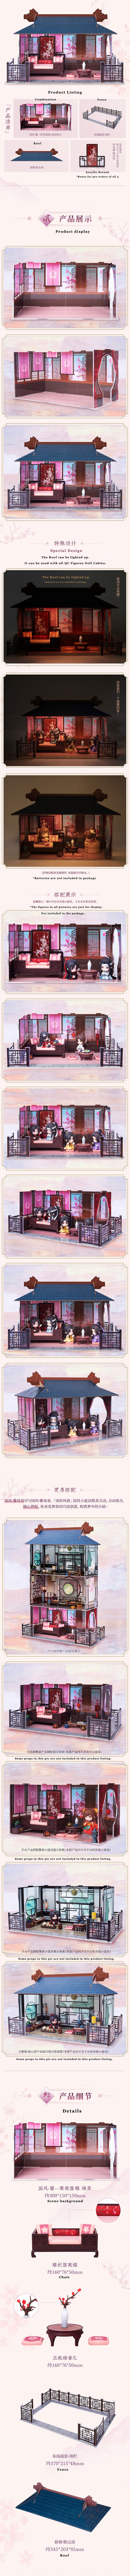 Qing Cang Figurine Assembled Display Box Cabin